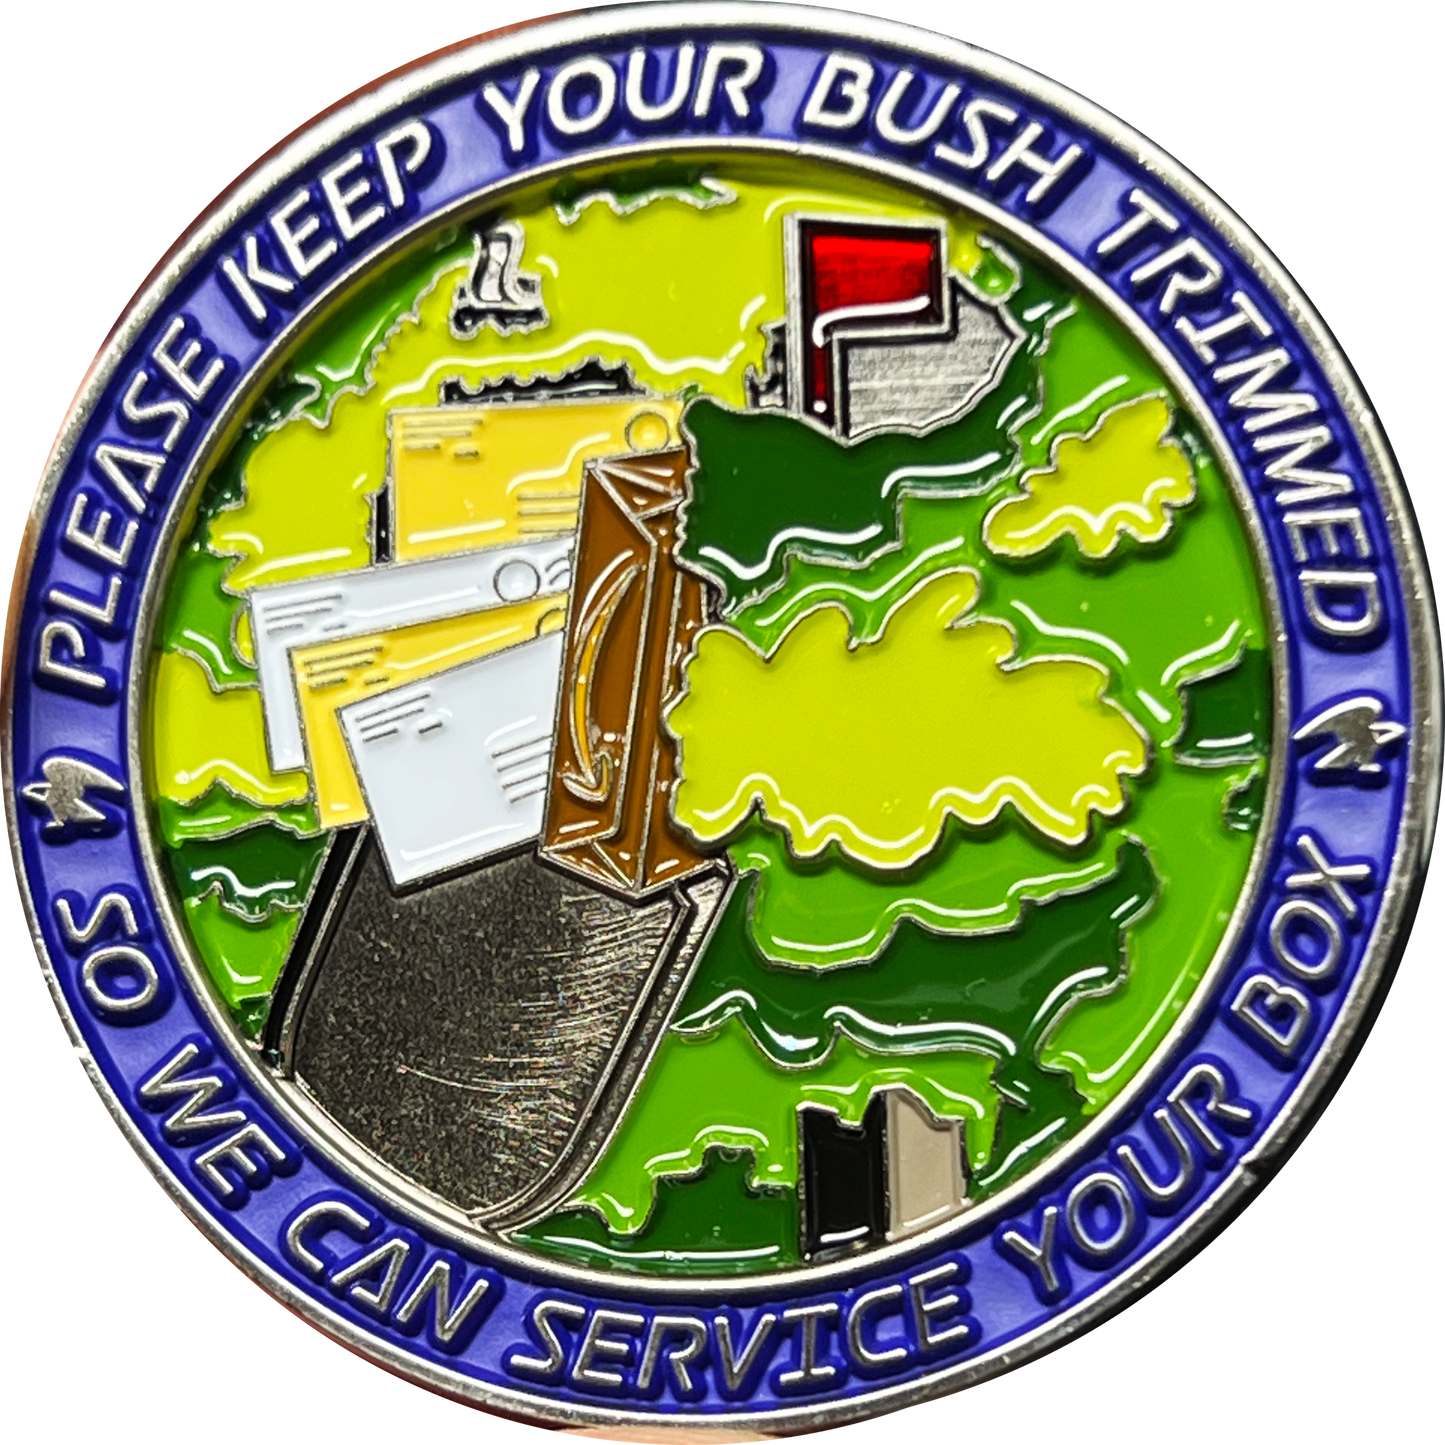 BL2-008B Trim Your Bush Challenge Coin US Postal Carrier Mail Handler Inspector Mailman